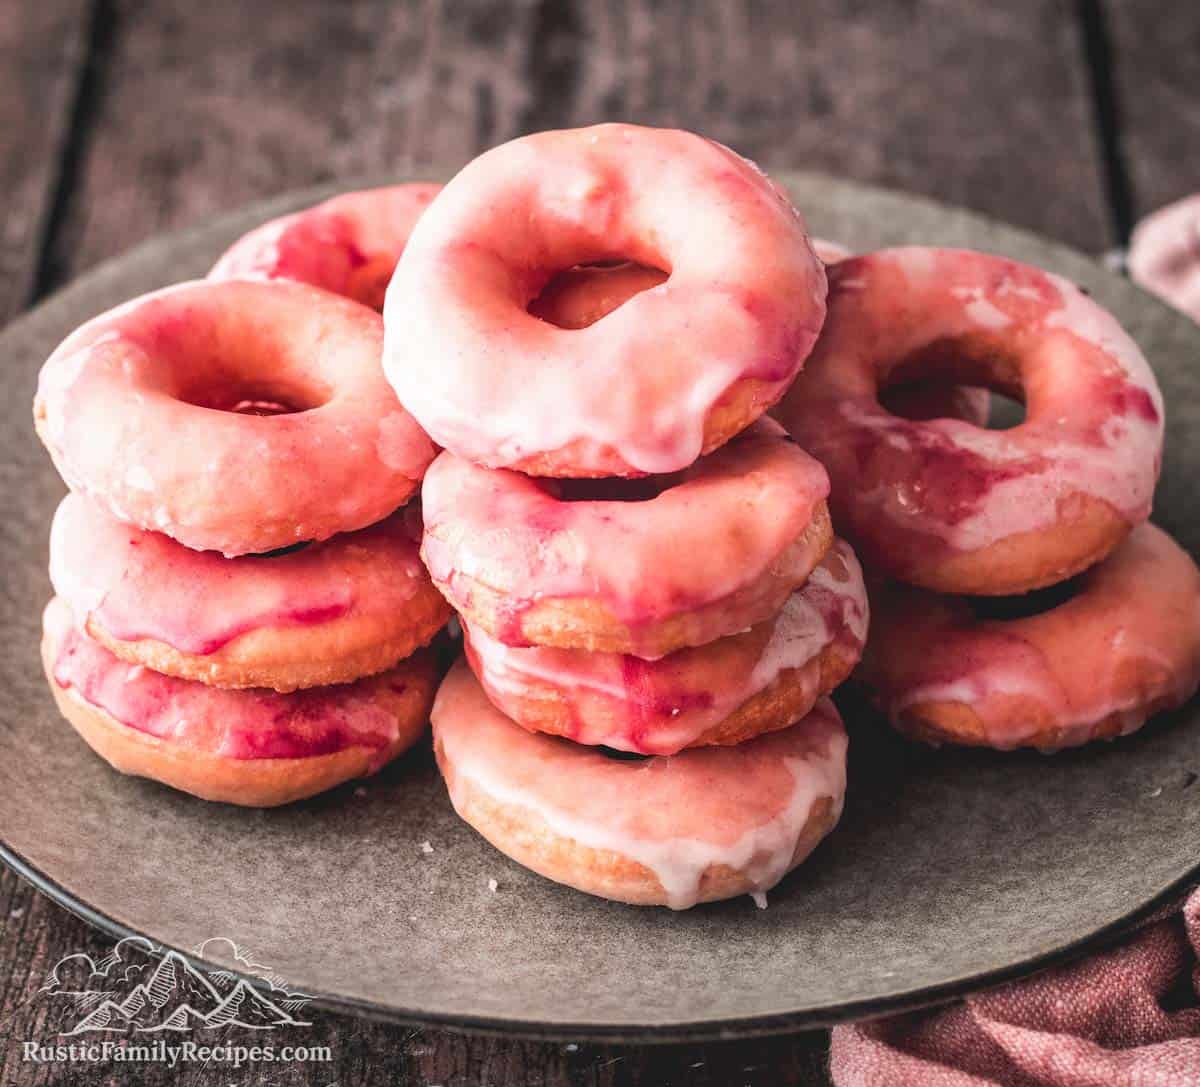 Homemade Glazed Doughnuts (Recipe + Video) - Sally's Baking Addiction